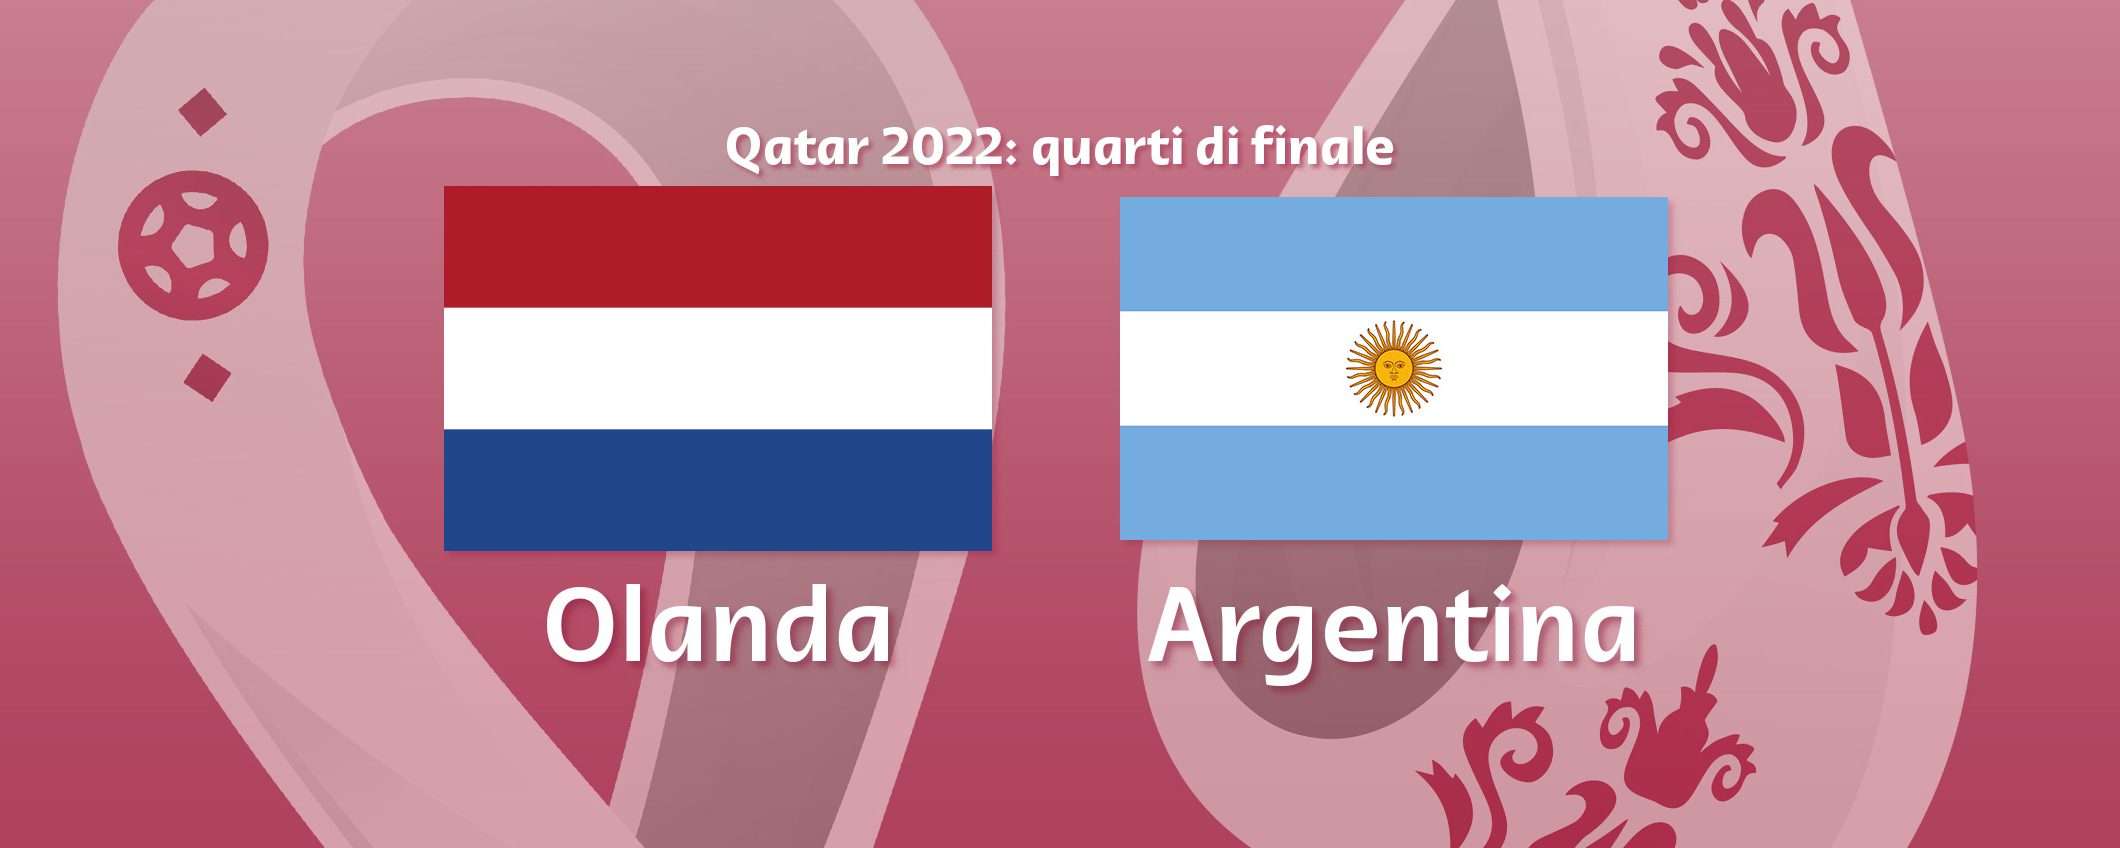 Come vedere Olanda-Argentina in streaming